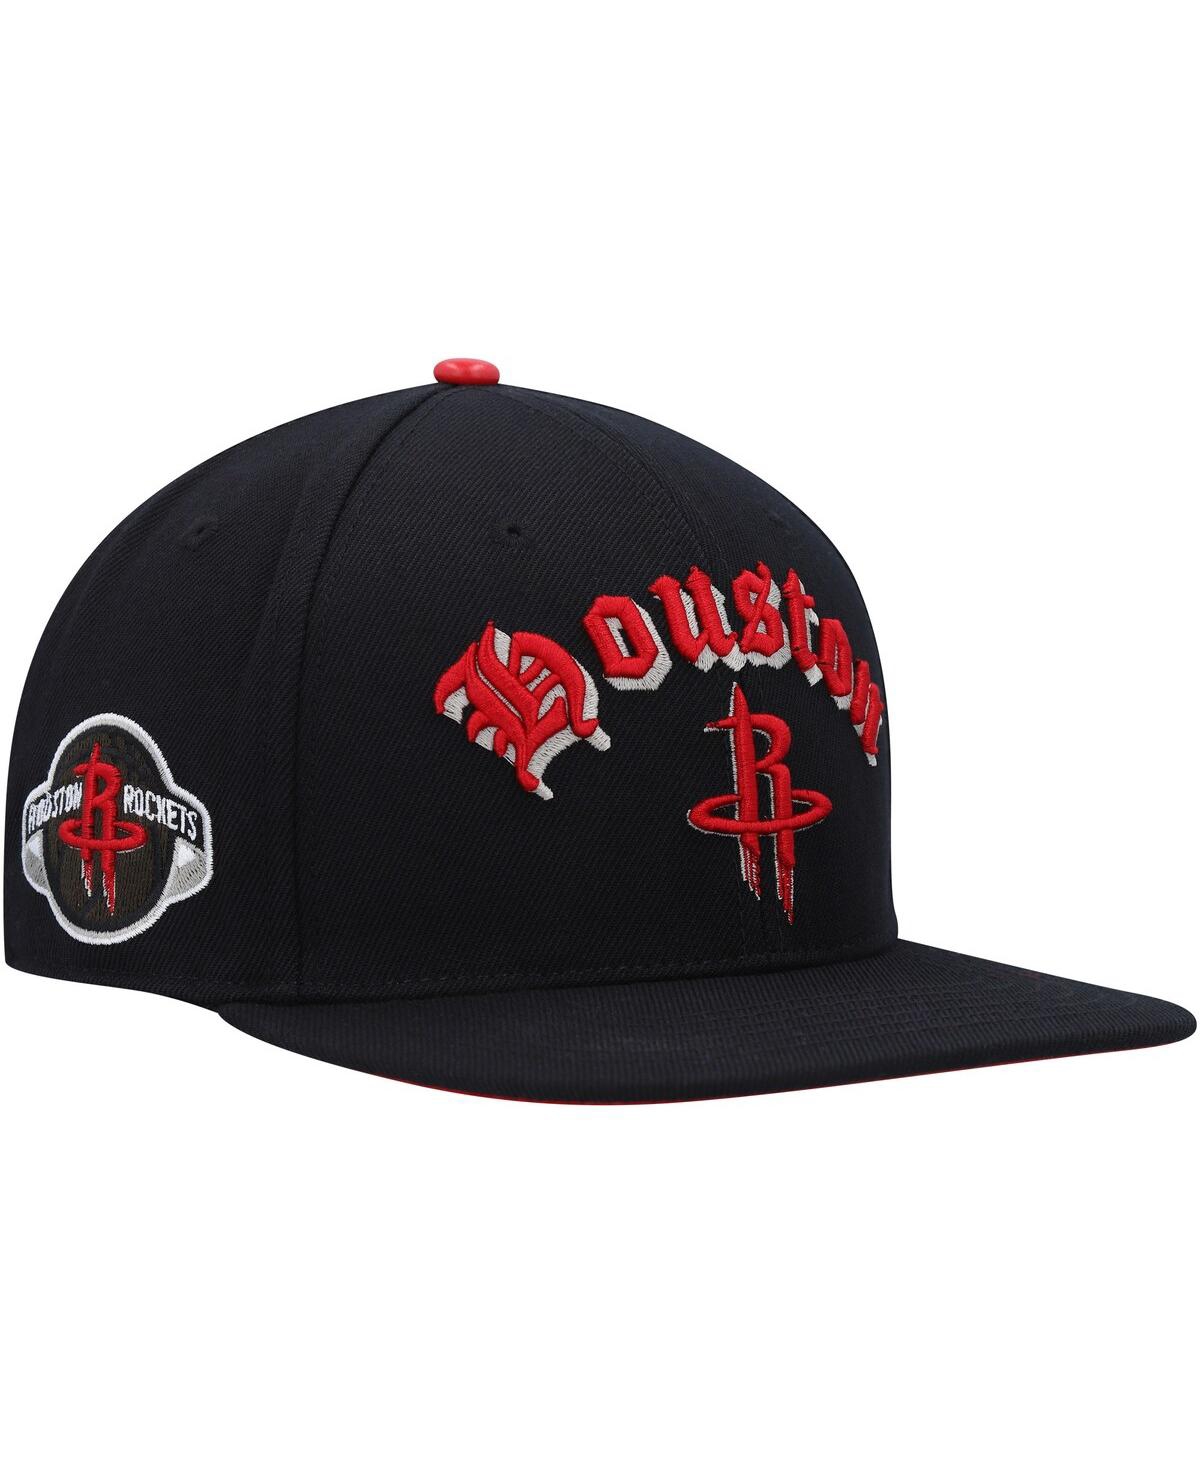 Shop Pro Standard Men's  Black Houston Rockets Old English Snapback Hat